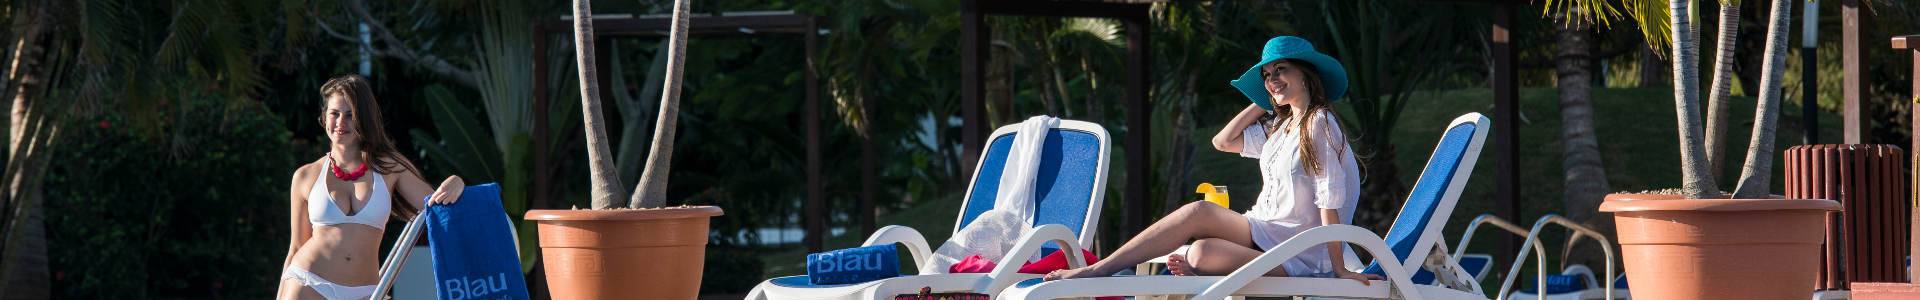 Blau hotels - Cuba - 